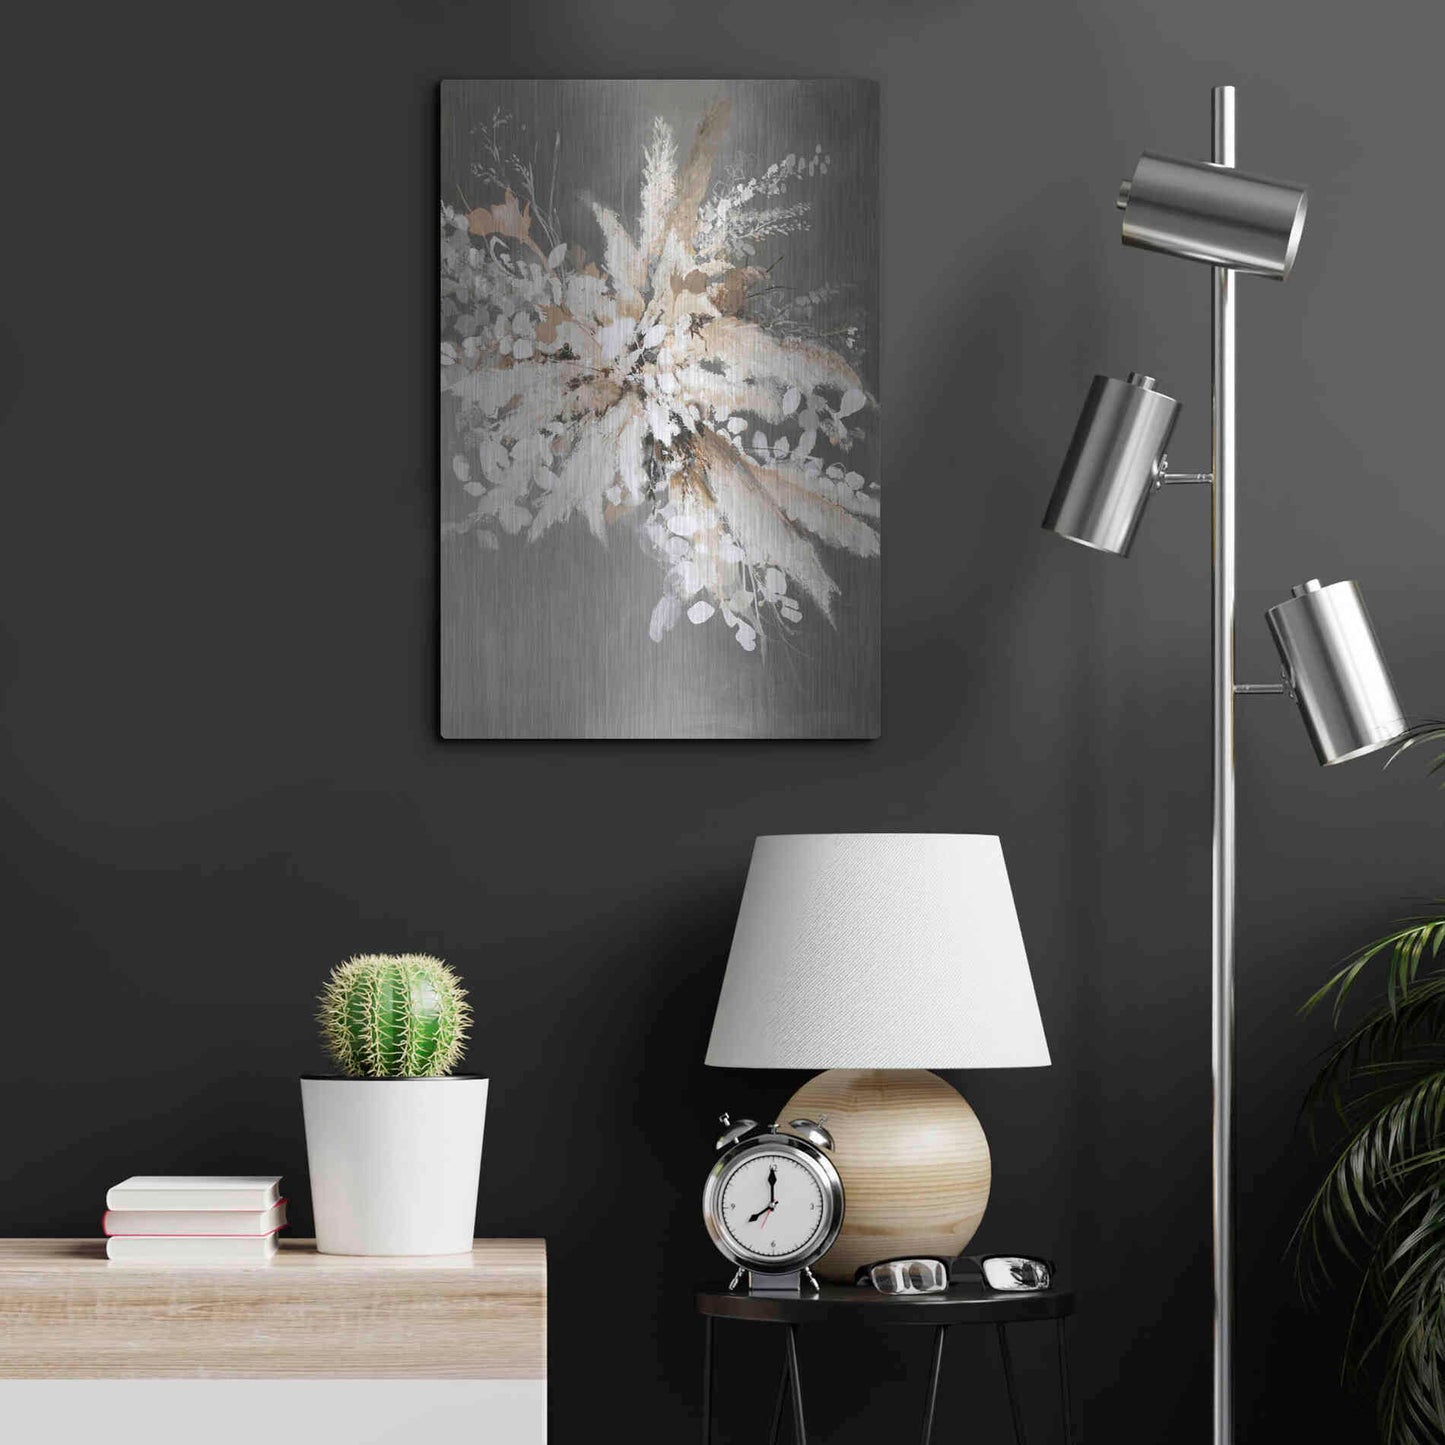 Luxe Metal Art 'Light Leaves 1' by Design Fabrikken, Metal Wall Art,16x24